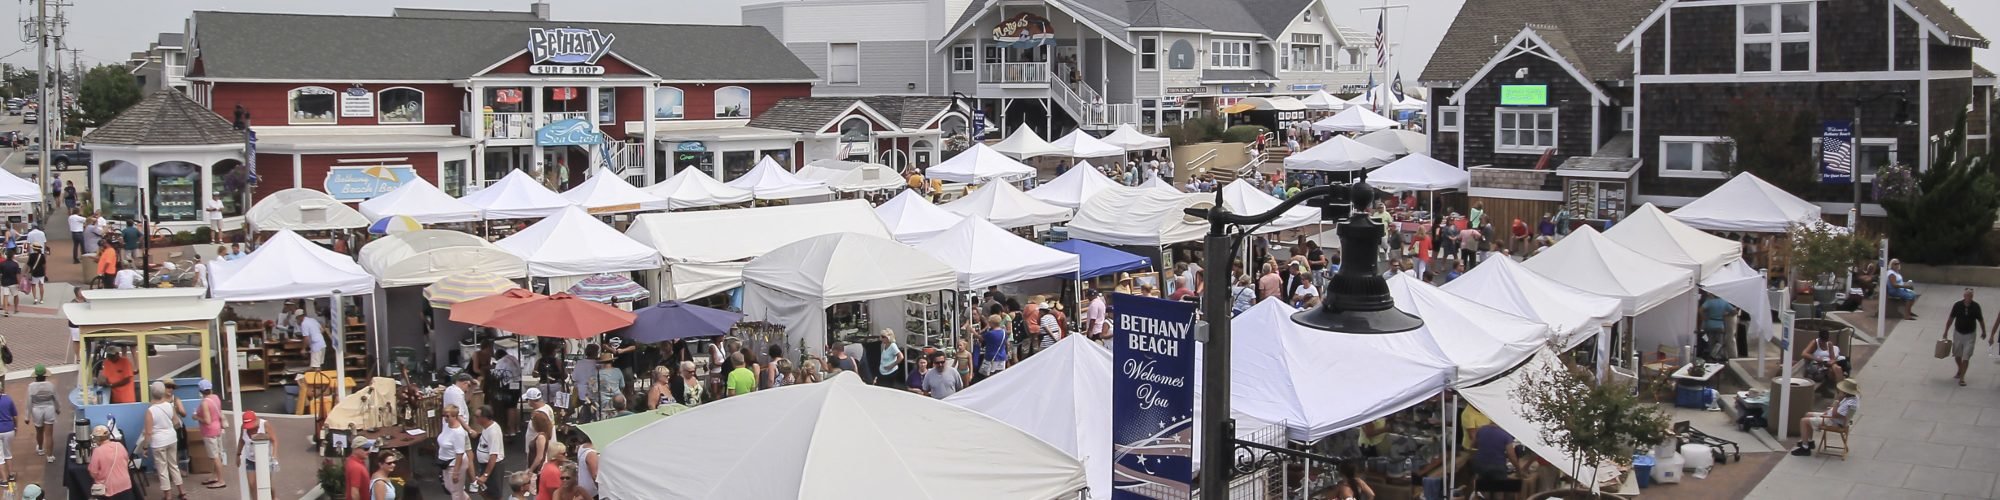 Bethany Beach Arts Festival Tents Near Boardwalk